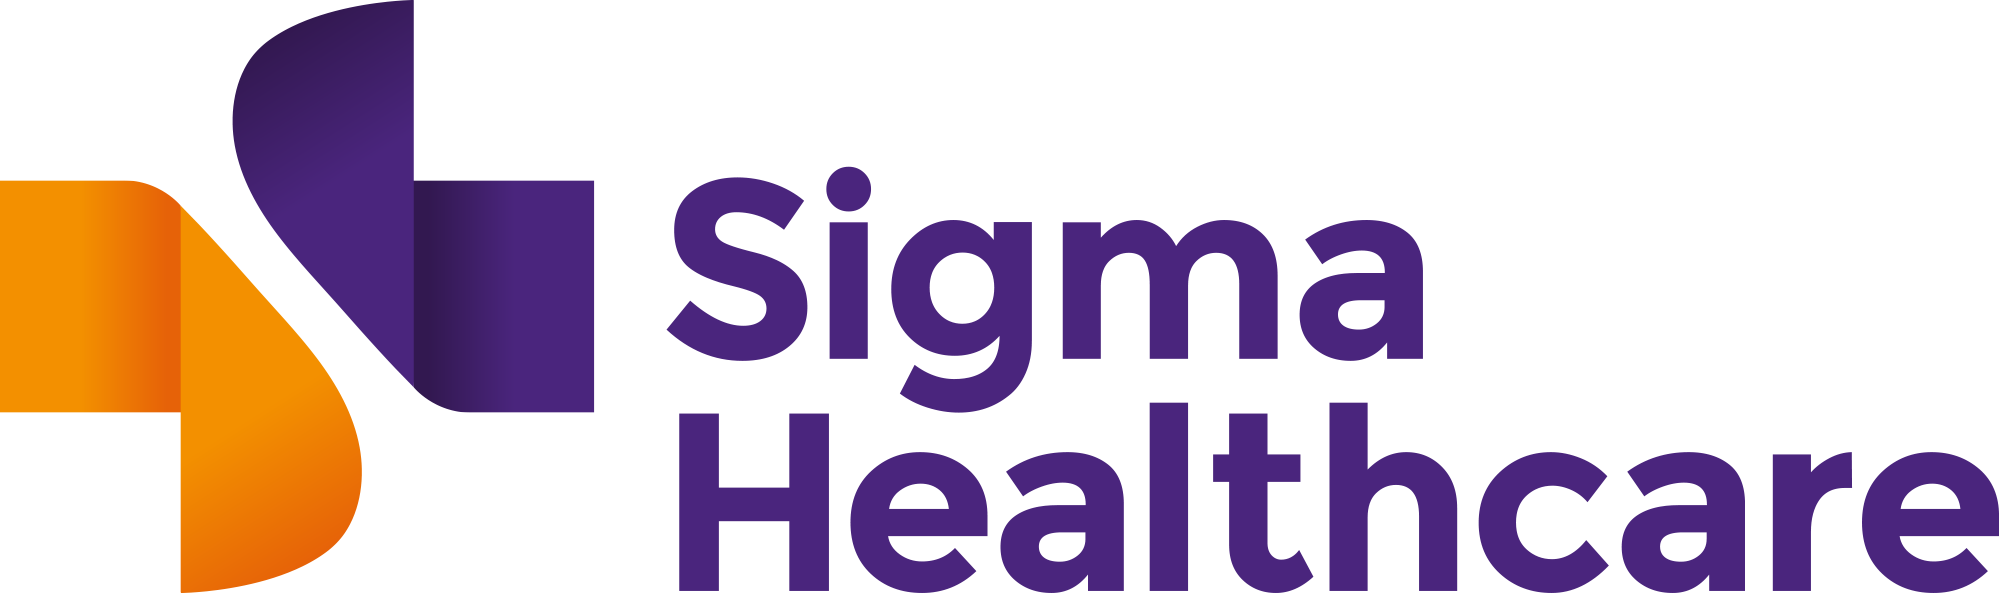 Sigma Healthcare Limited Logo